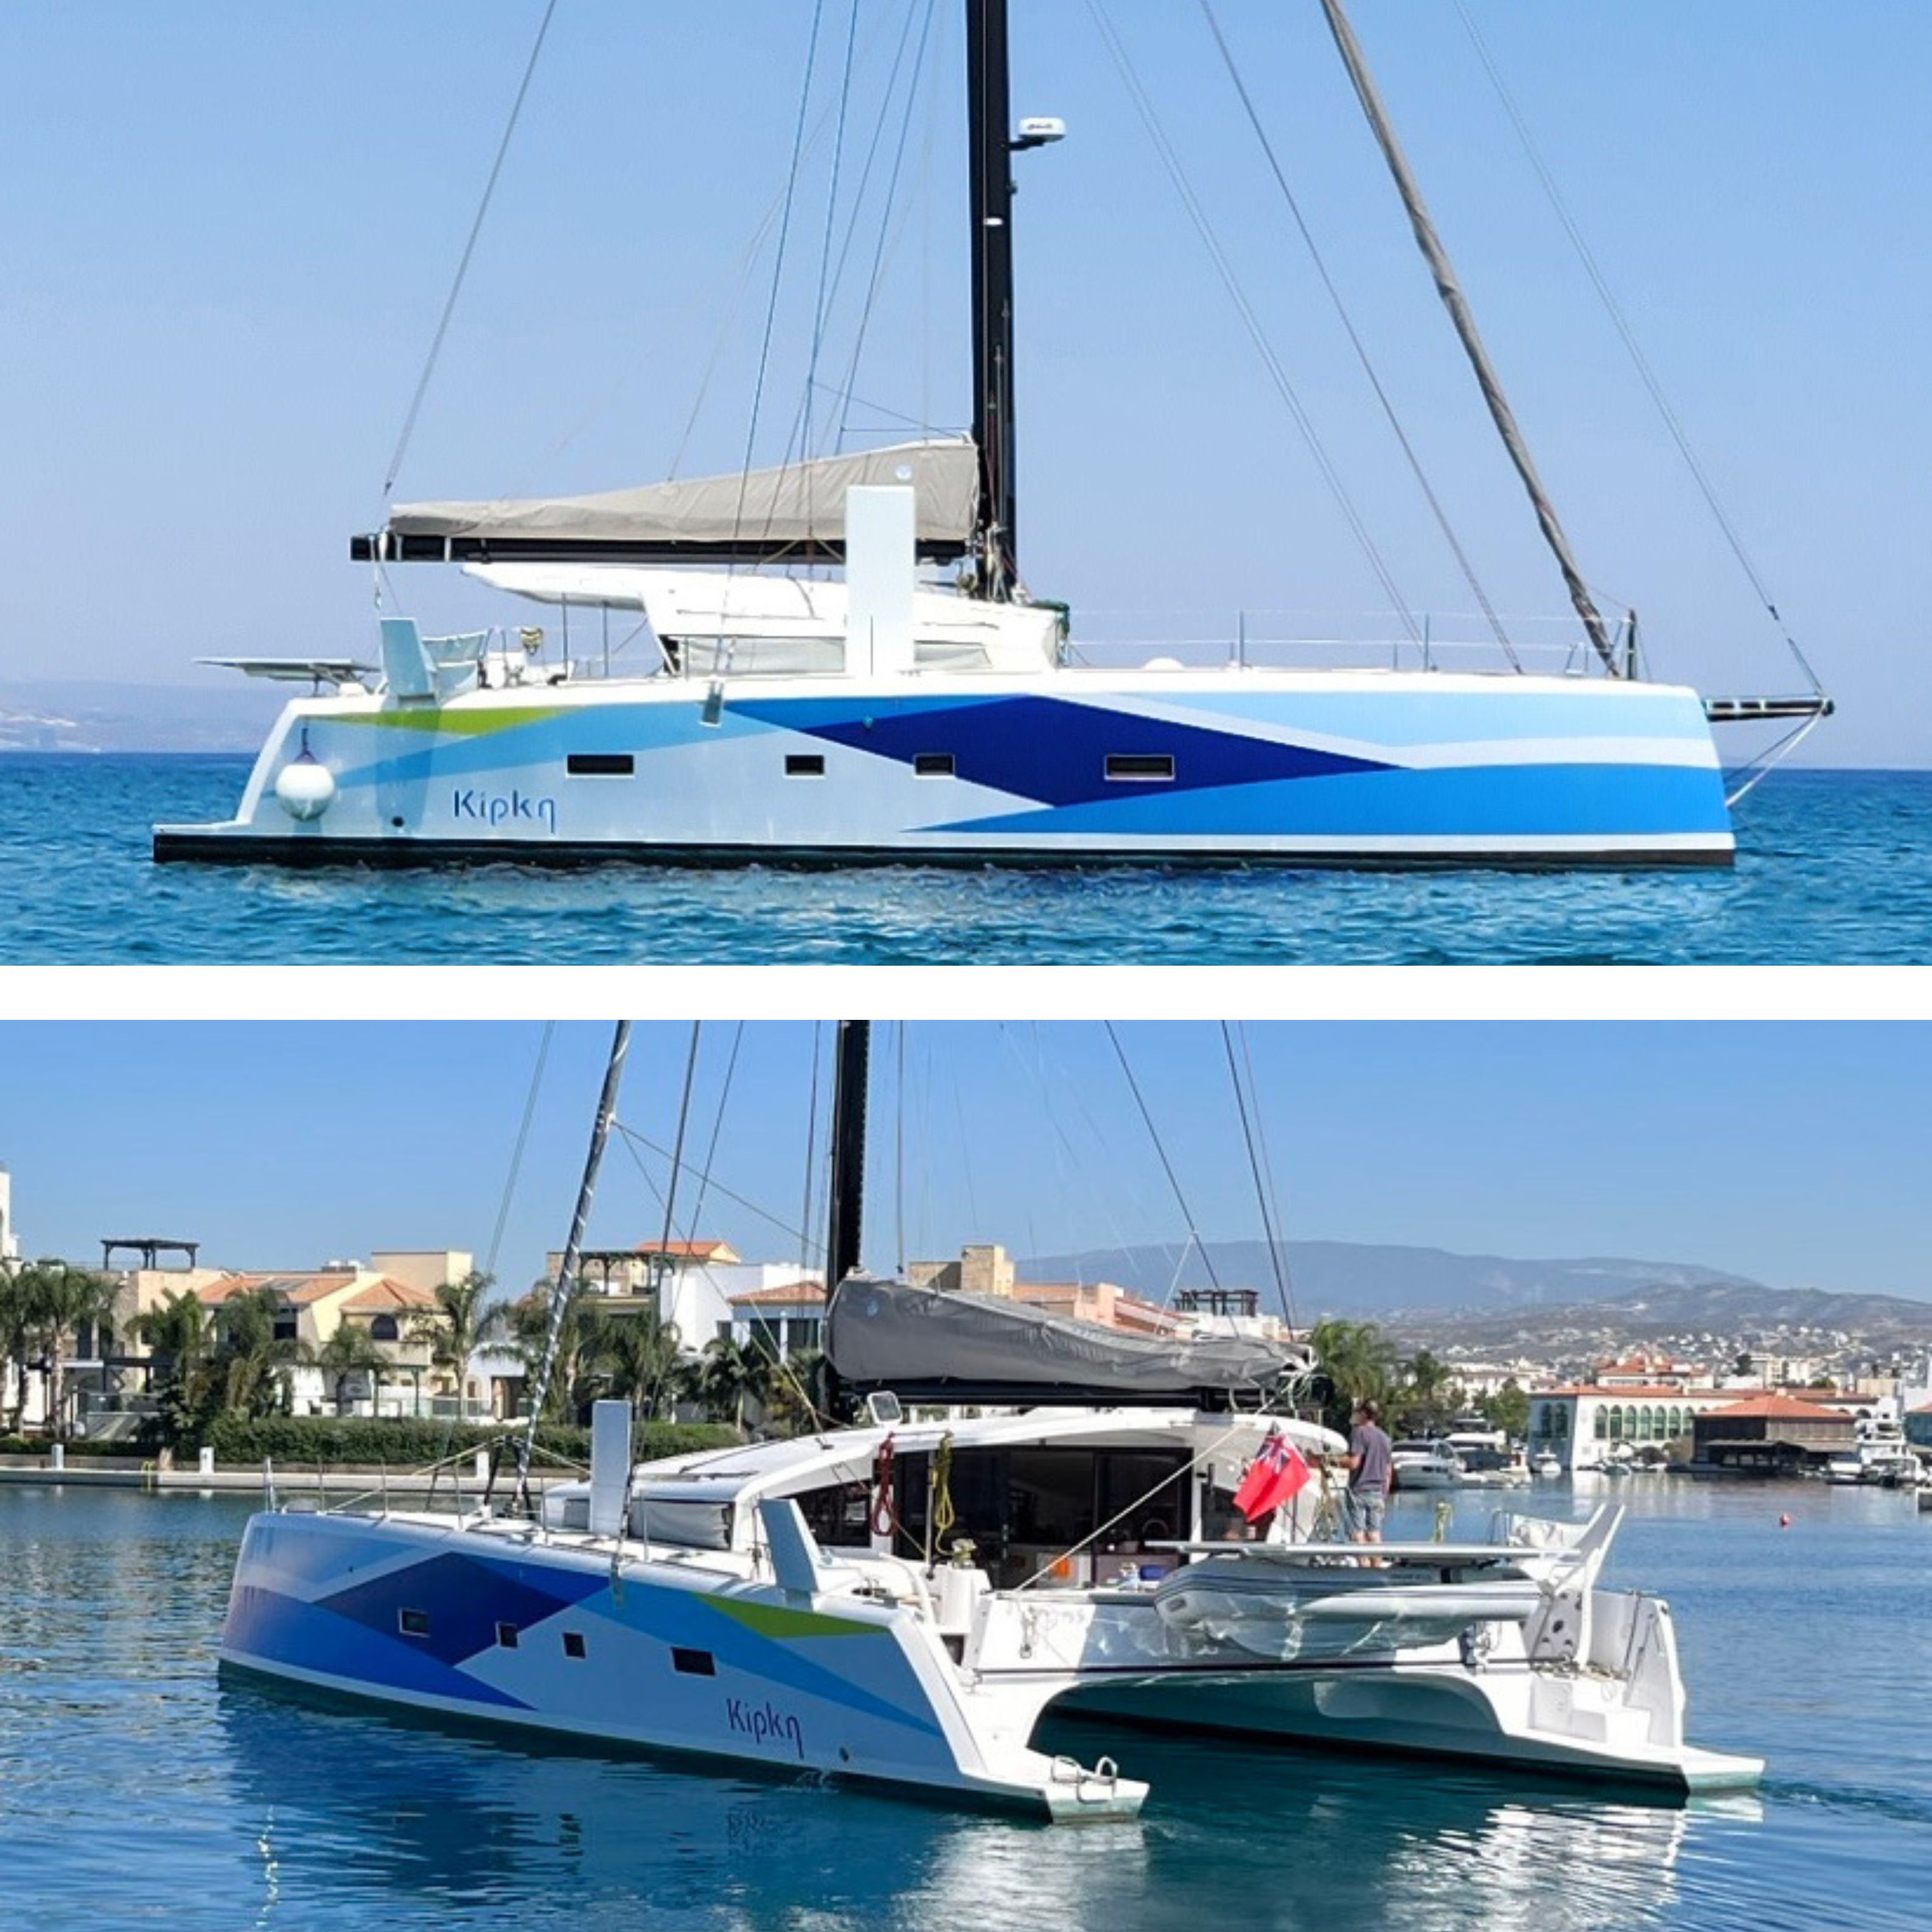 KIRKI: New catamaran for sale